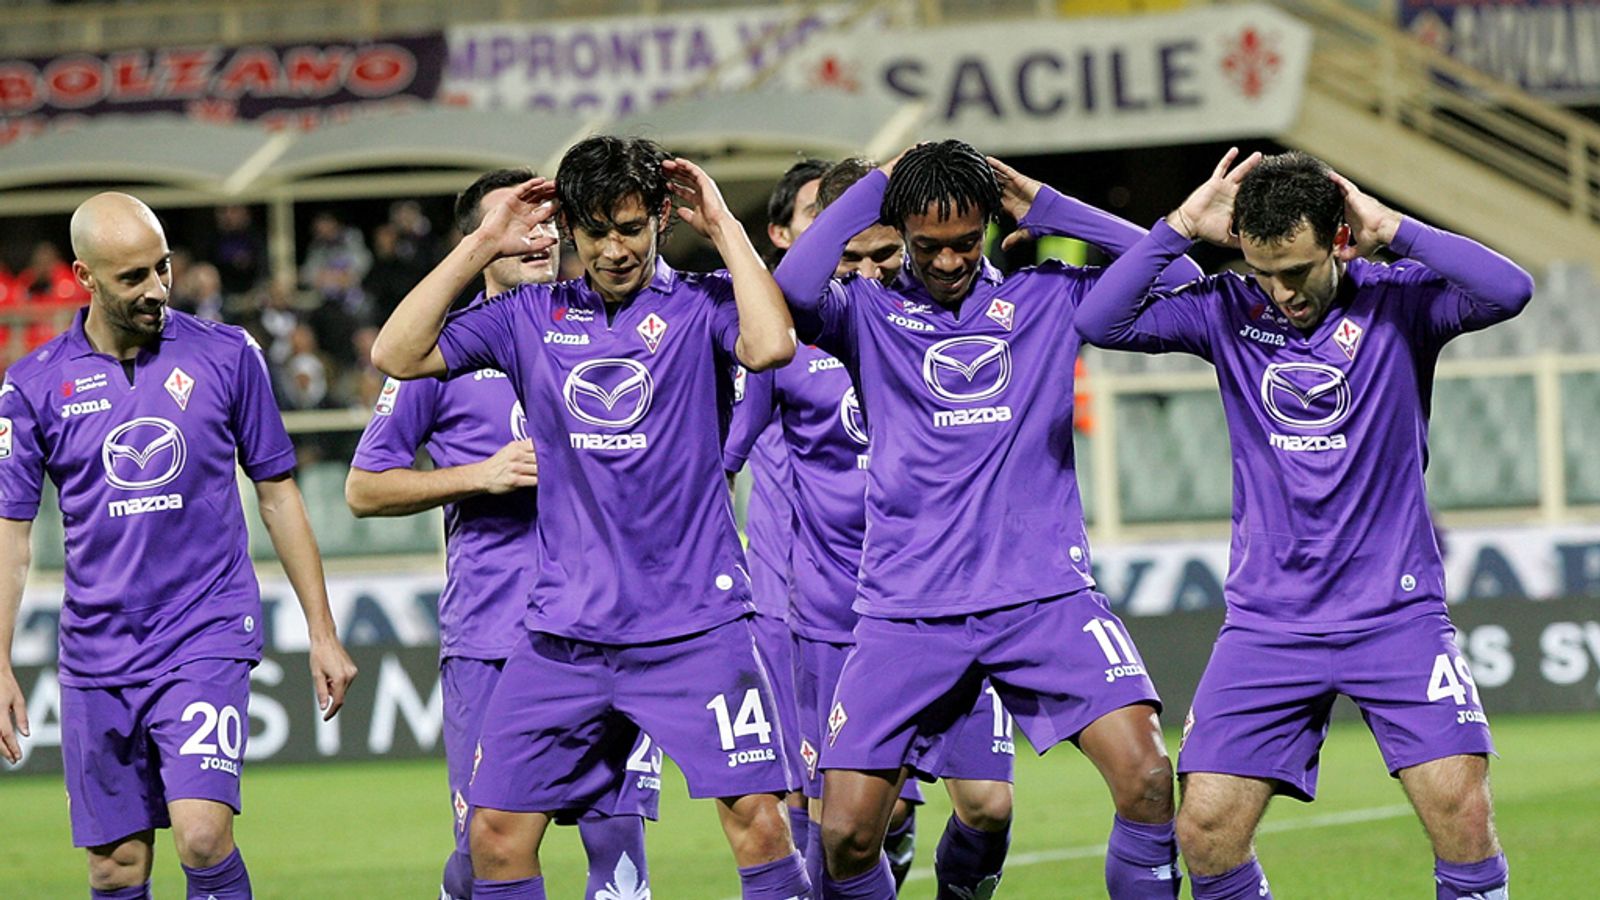 Mixed Zone: Fiorentina vs Bologna